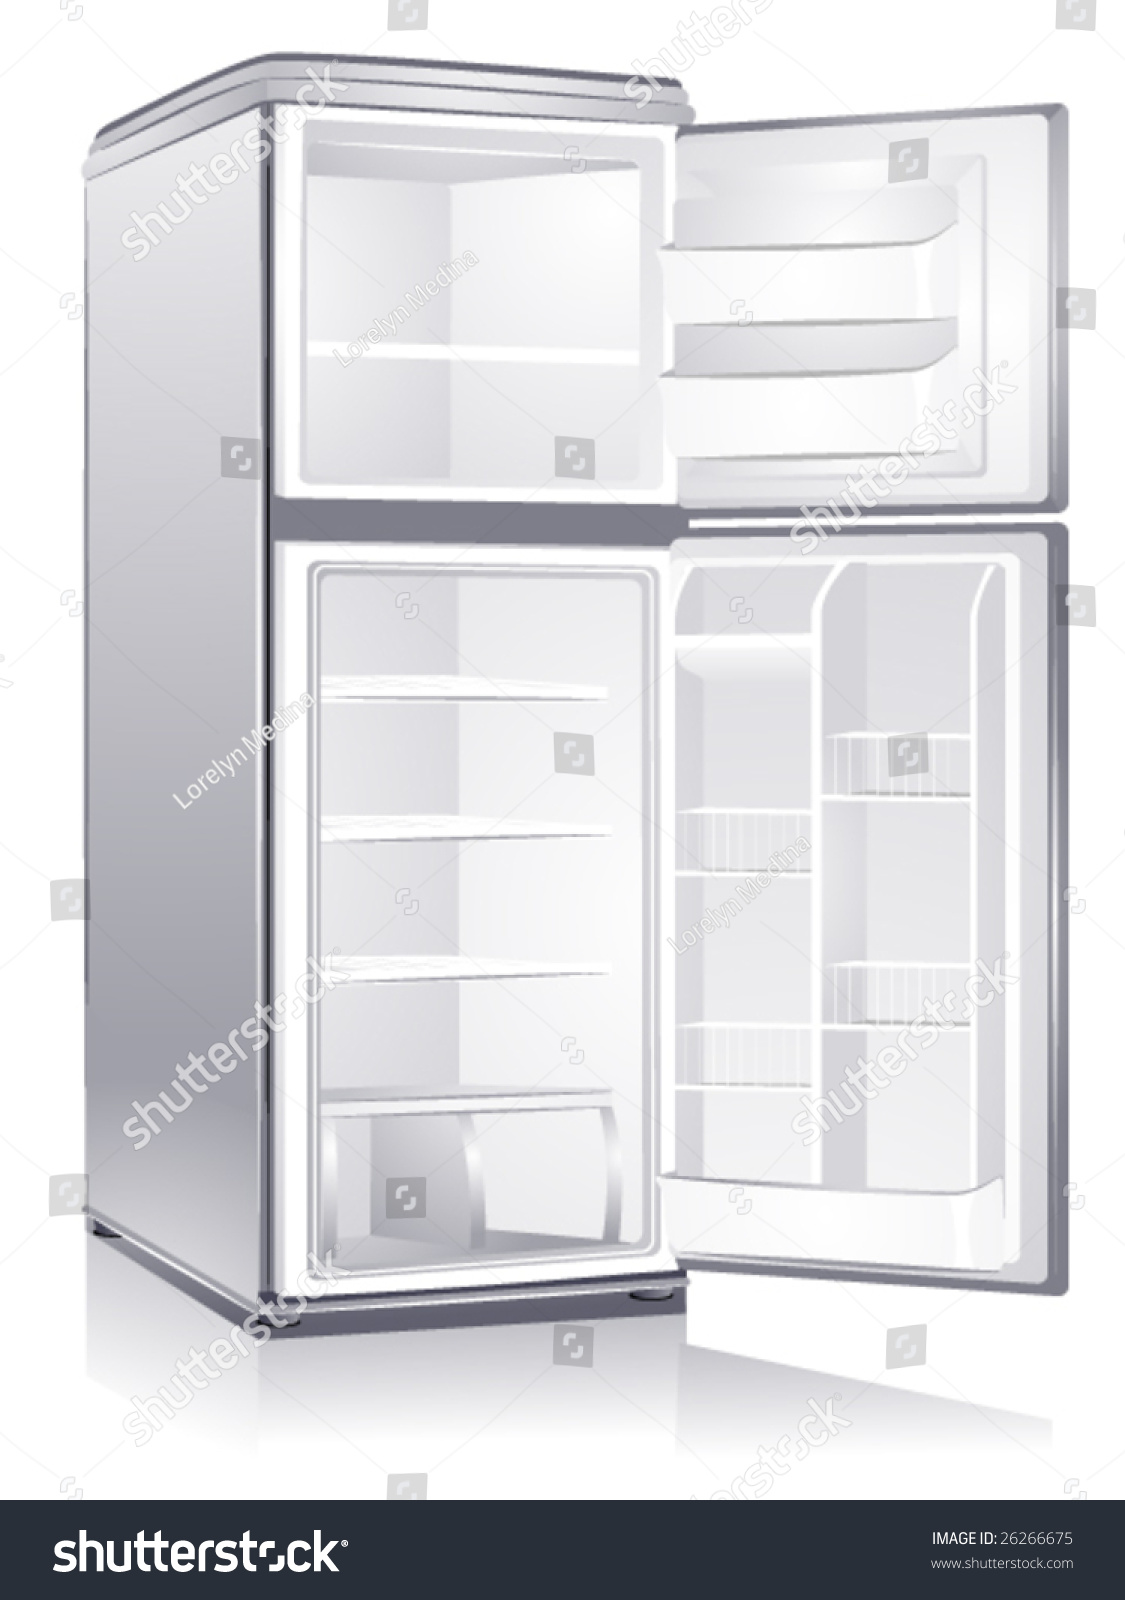 Empty Refrigerator Vector Stock Vector 26266675 - Shutterstock